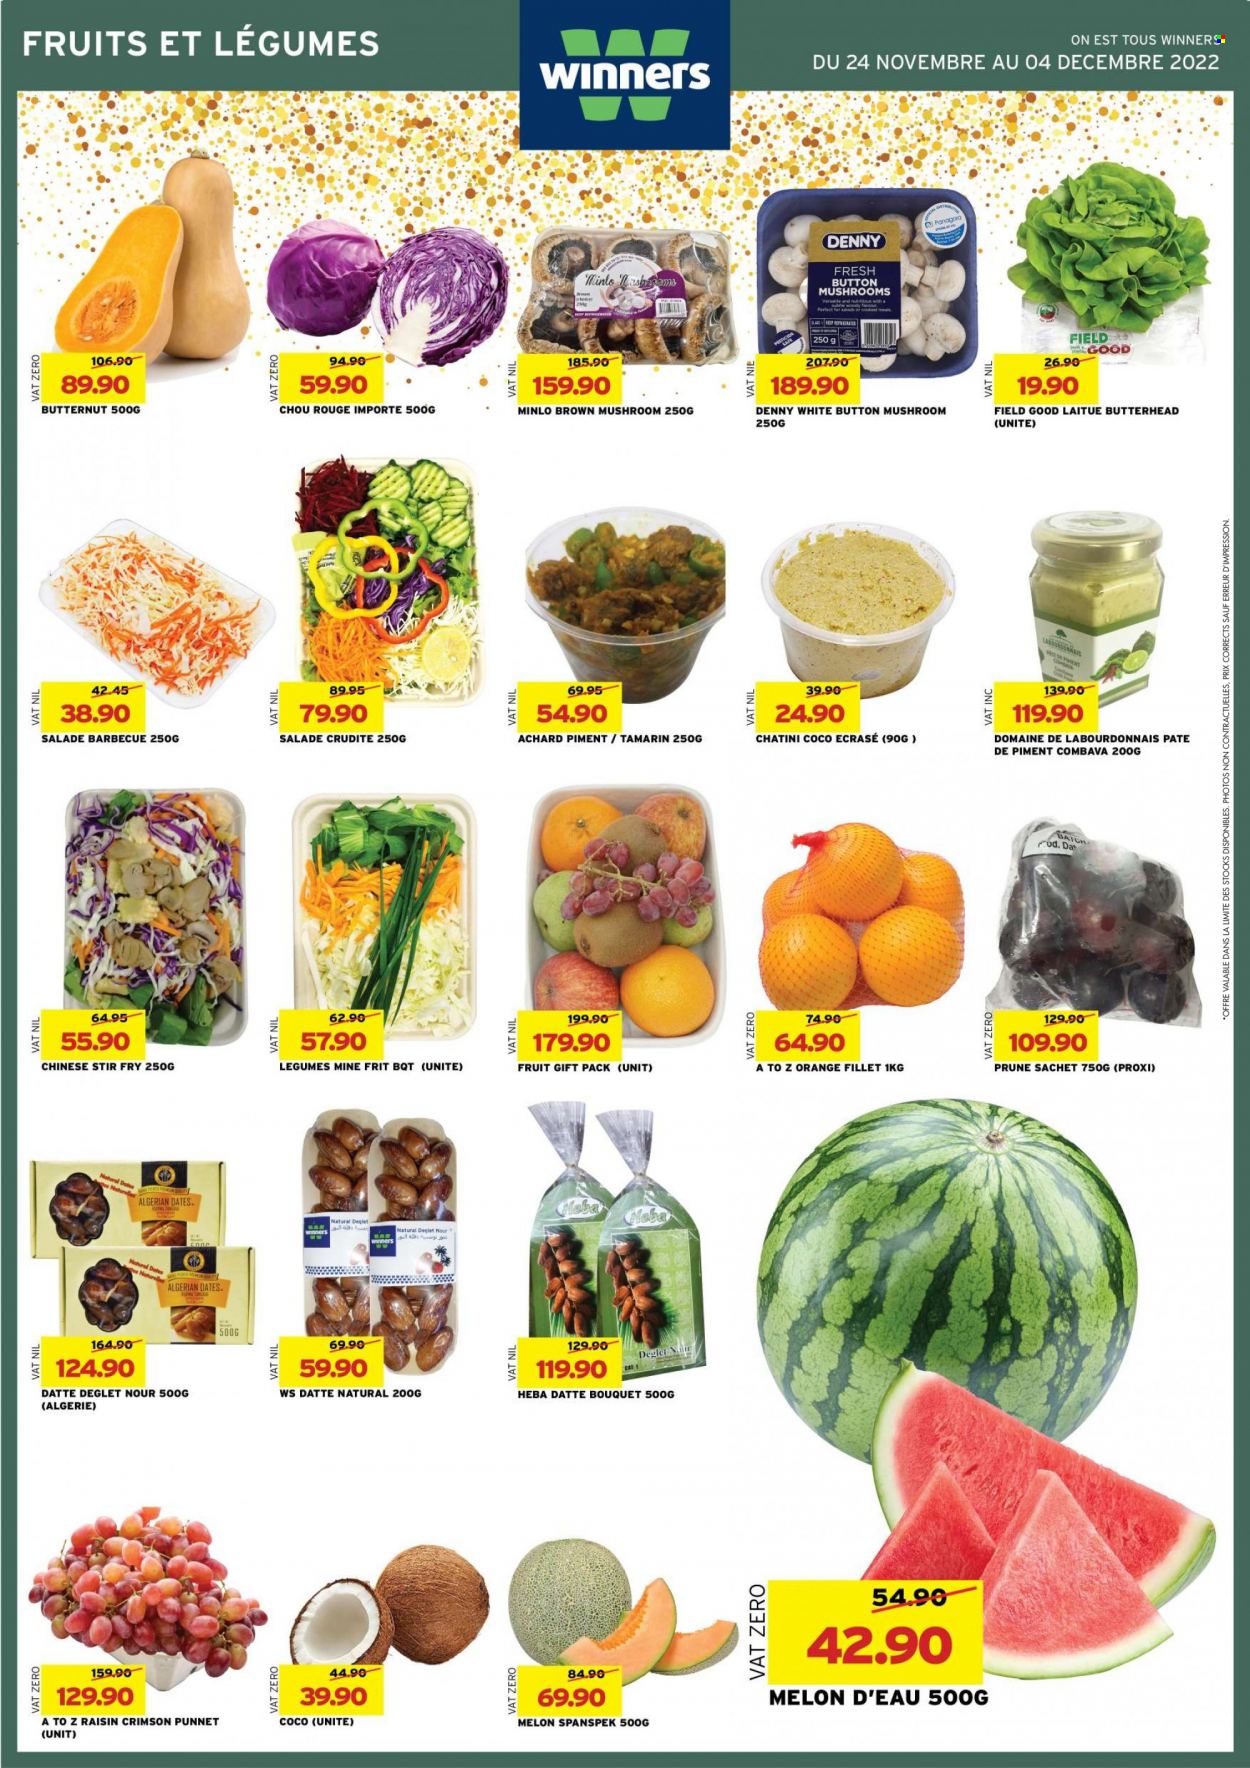 Winner's Catalogue - 24.11.2022 - 4.12.2022 - Sales products - mushroom, butternut squash, orange, melons, spanspek. Page 7.